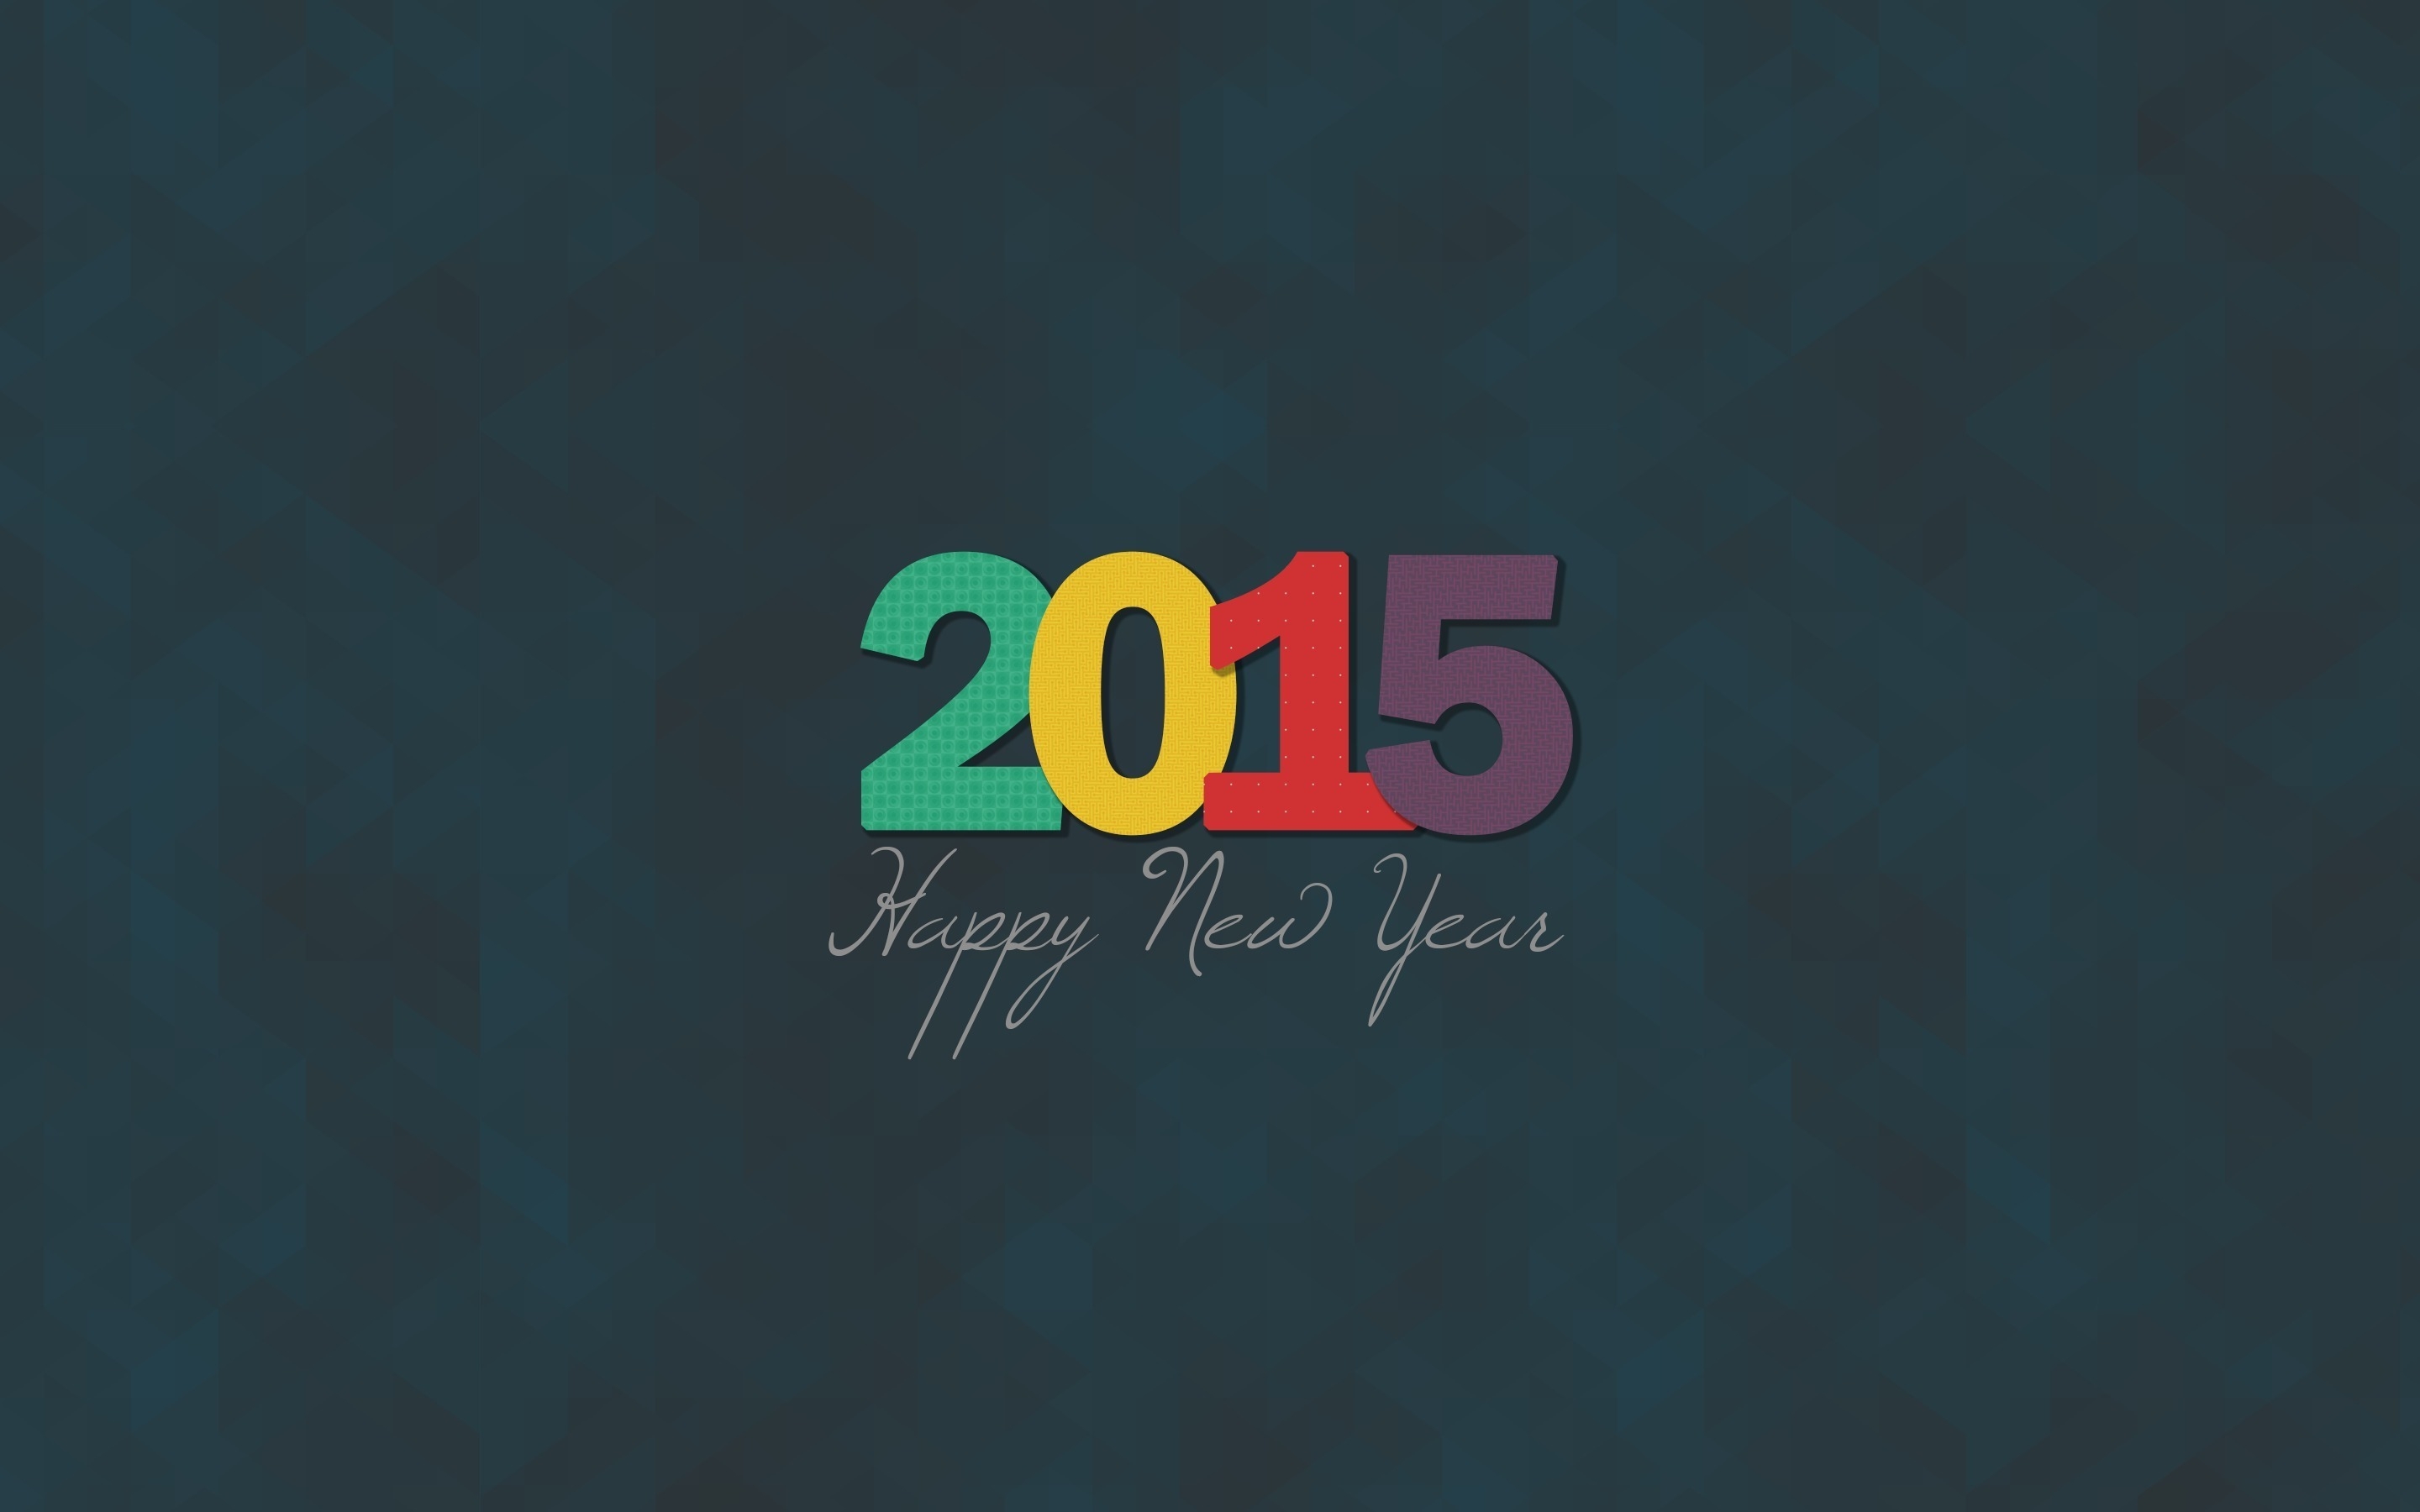 2015 Minimalistic New Year for 2880 x 1800 Retina Display resolution